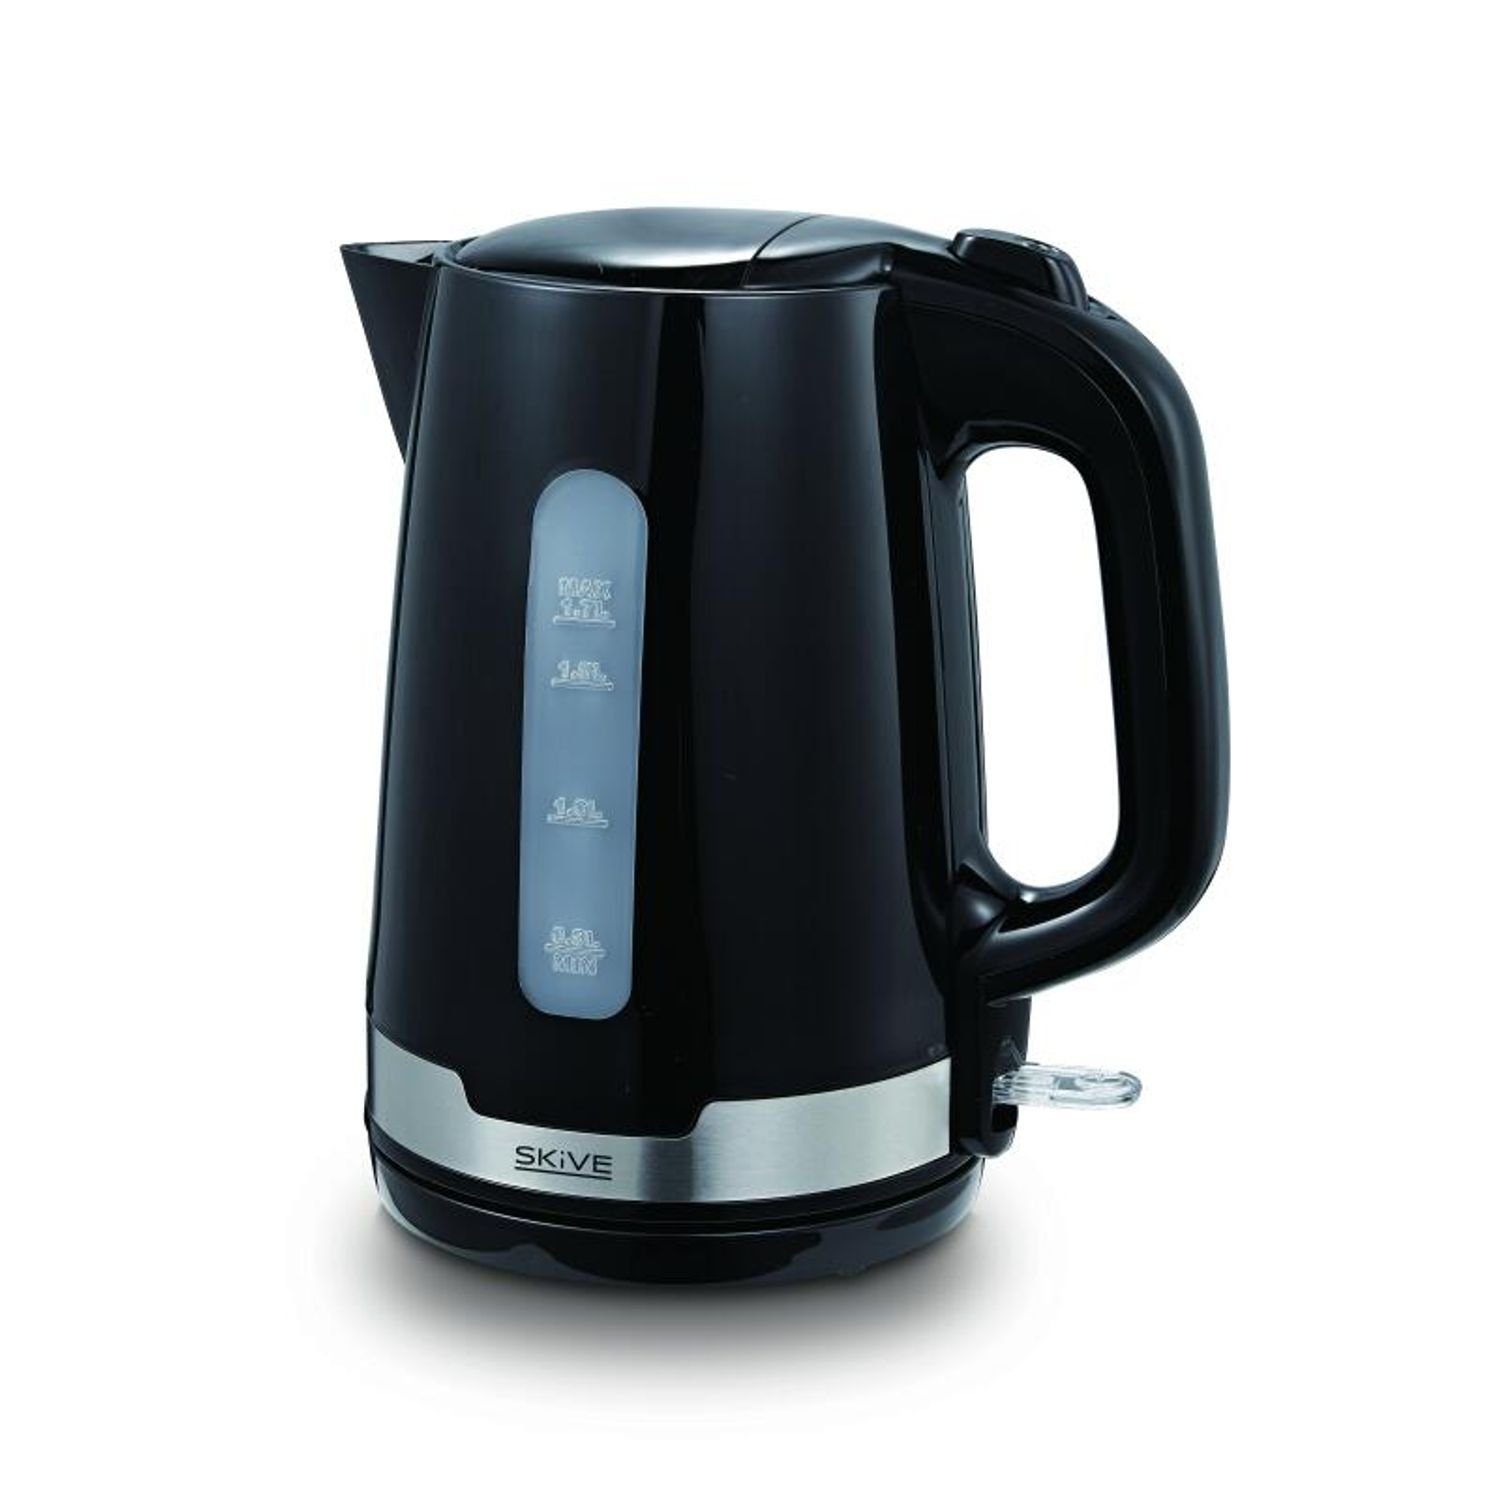 Adexi Wasserkocher Wasserkocher 1,7 L Heizen Hitze Erwärmen Tee Kettle Küchengeräte Wohnu